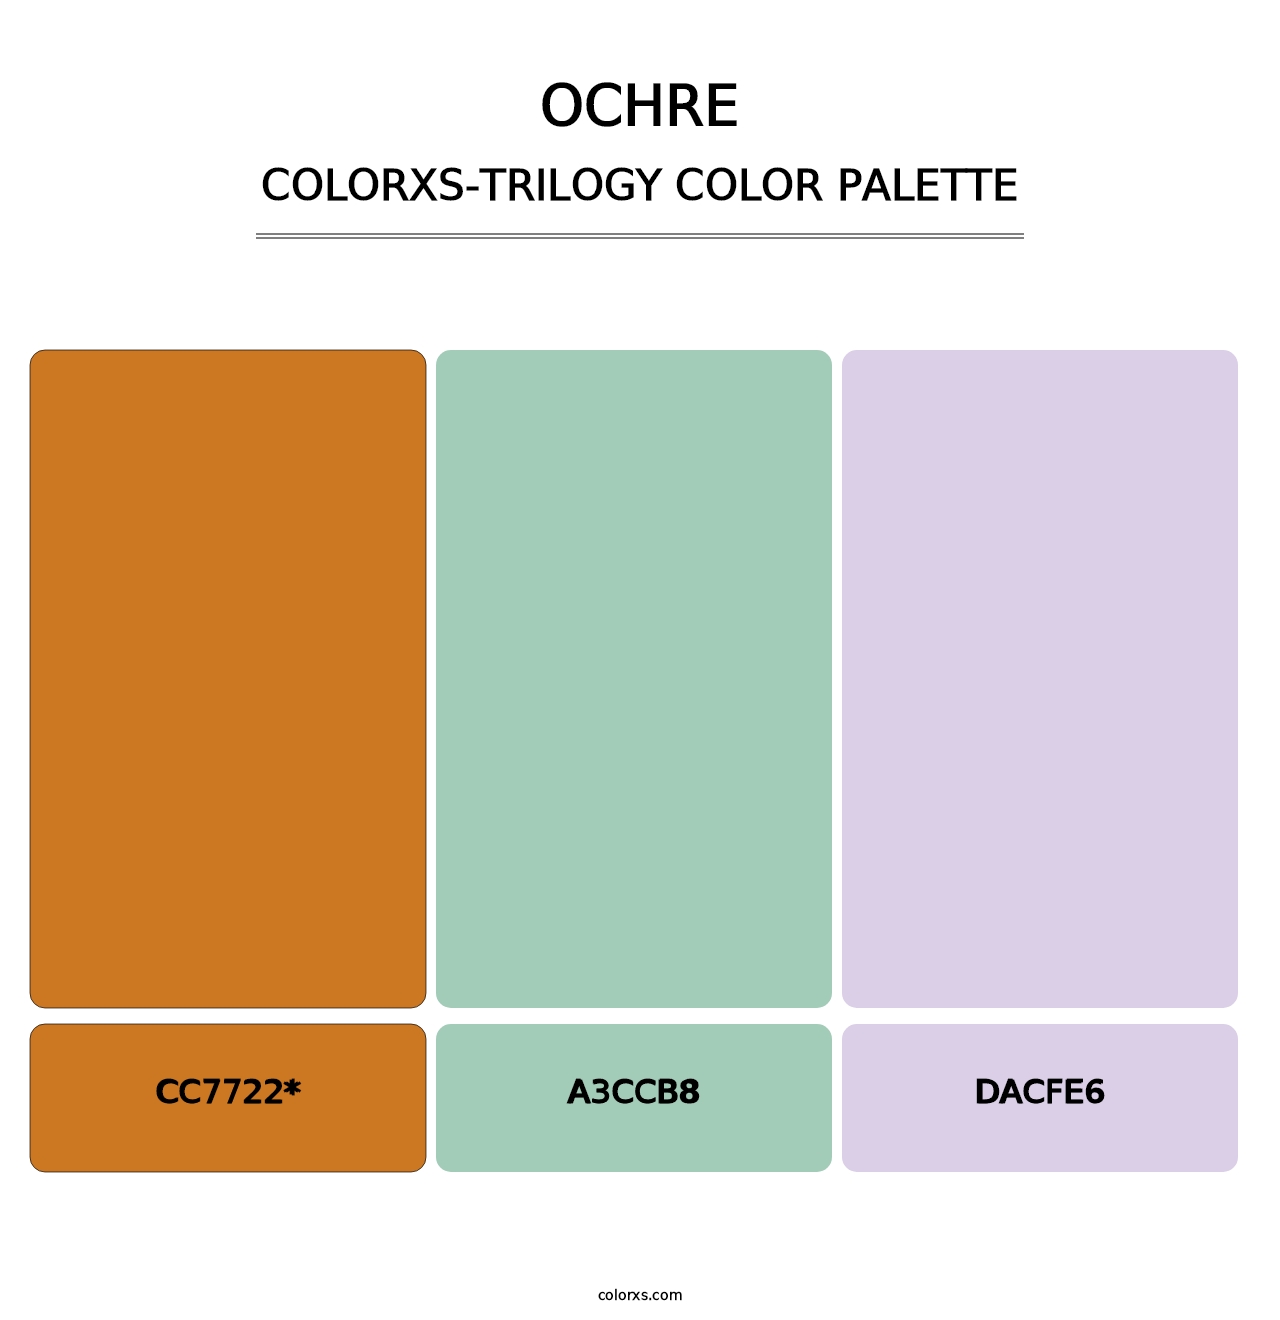 Ochre - Colorxs Trilogy Palette